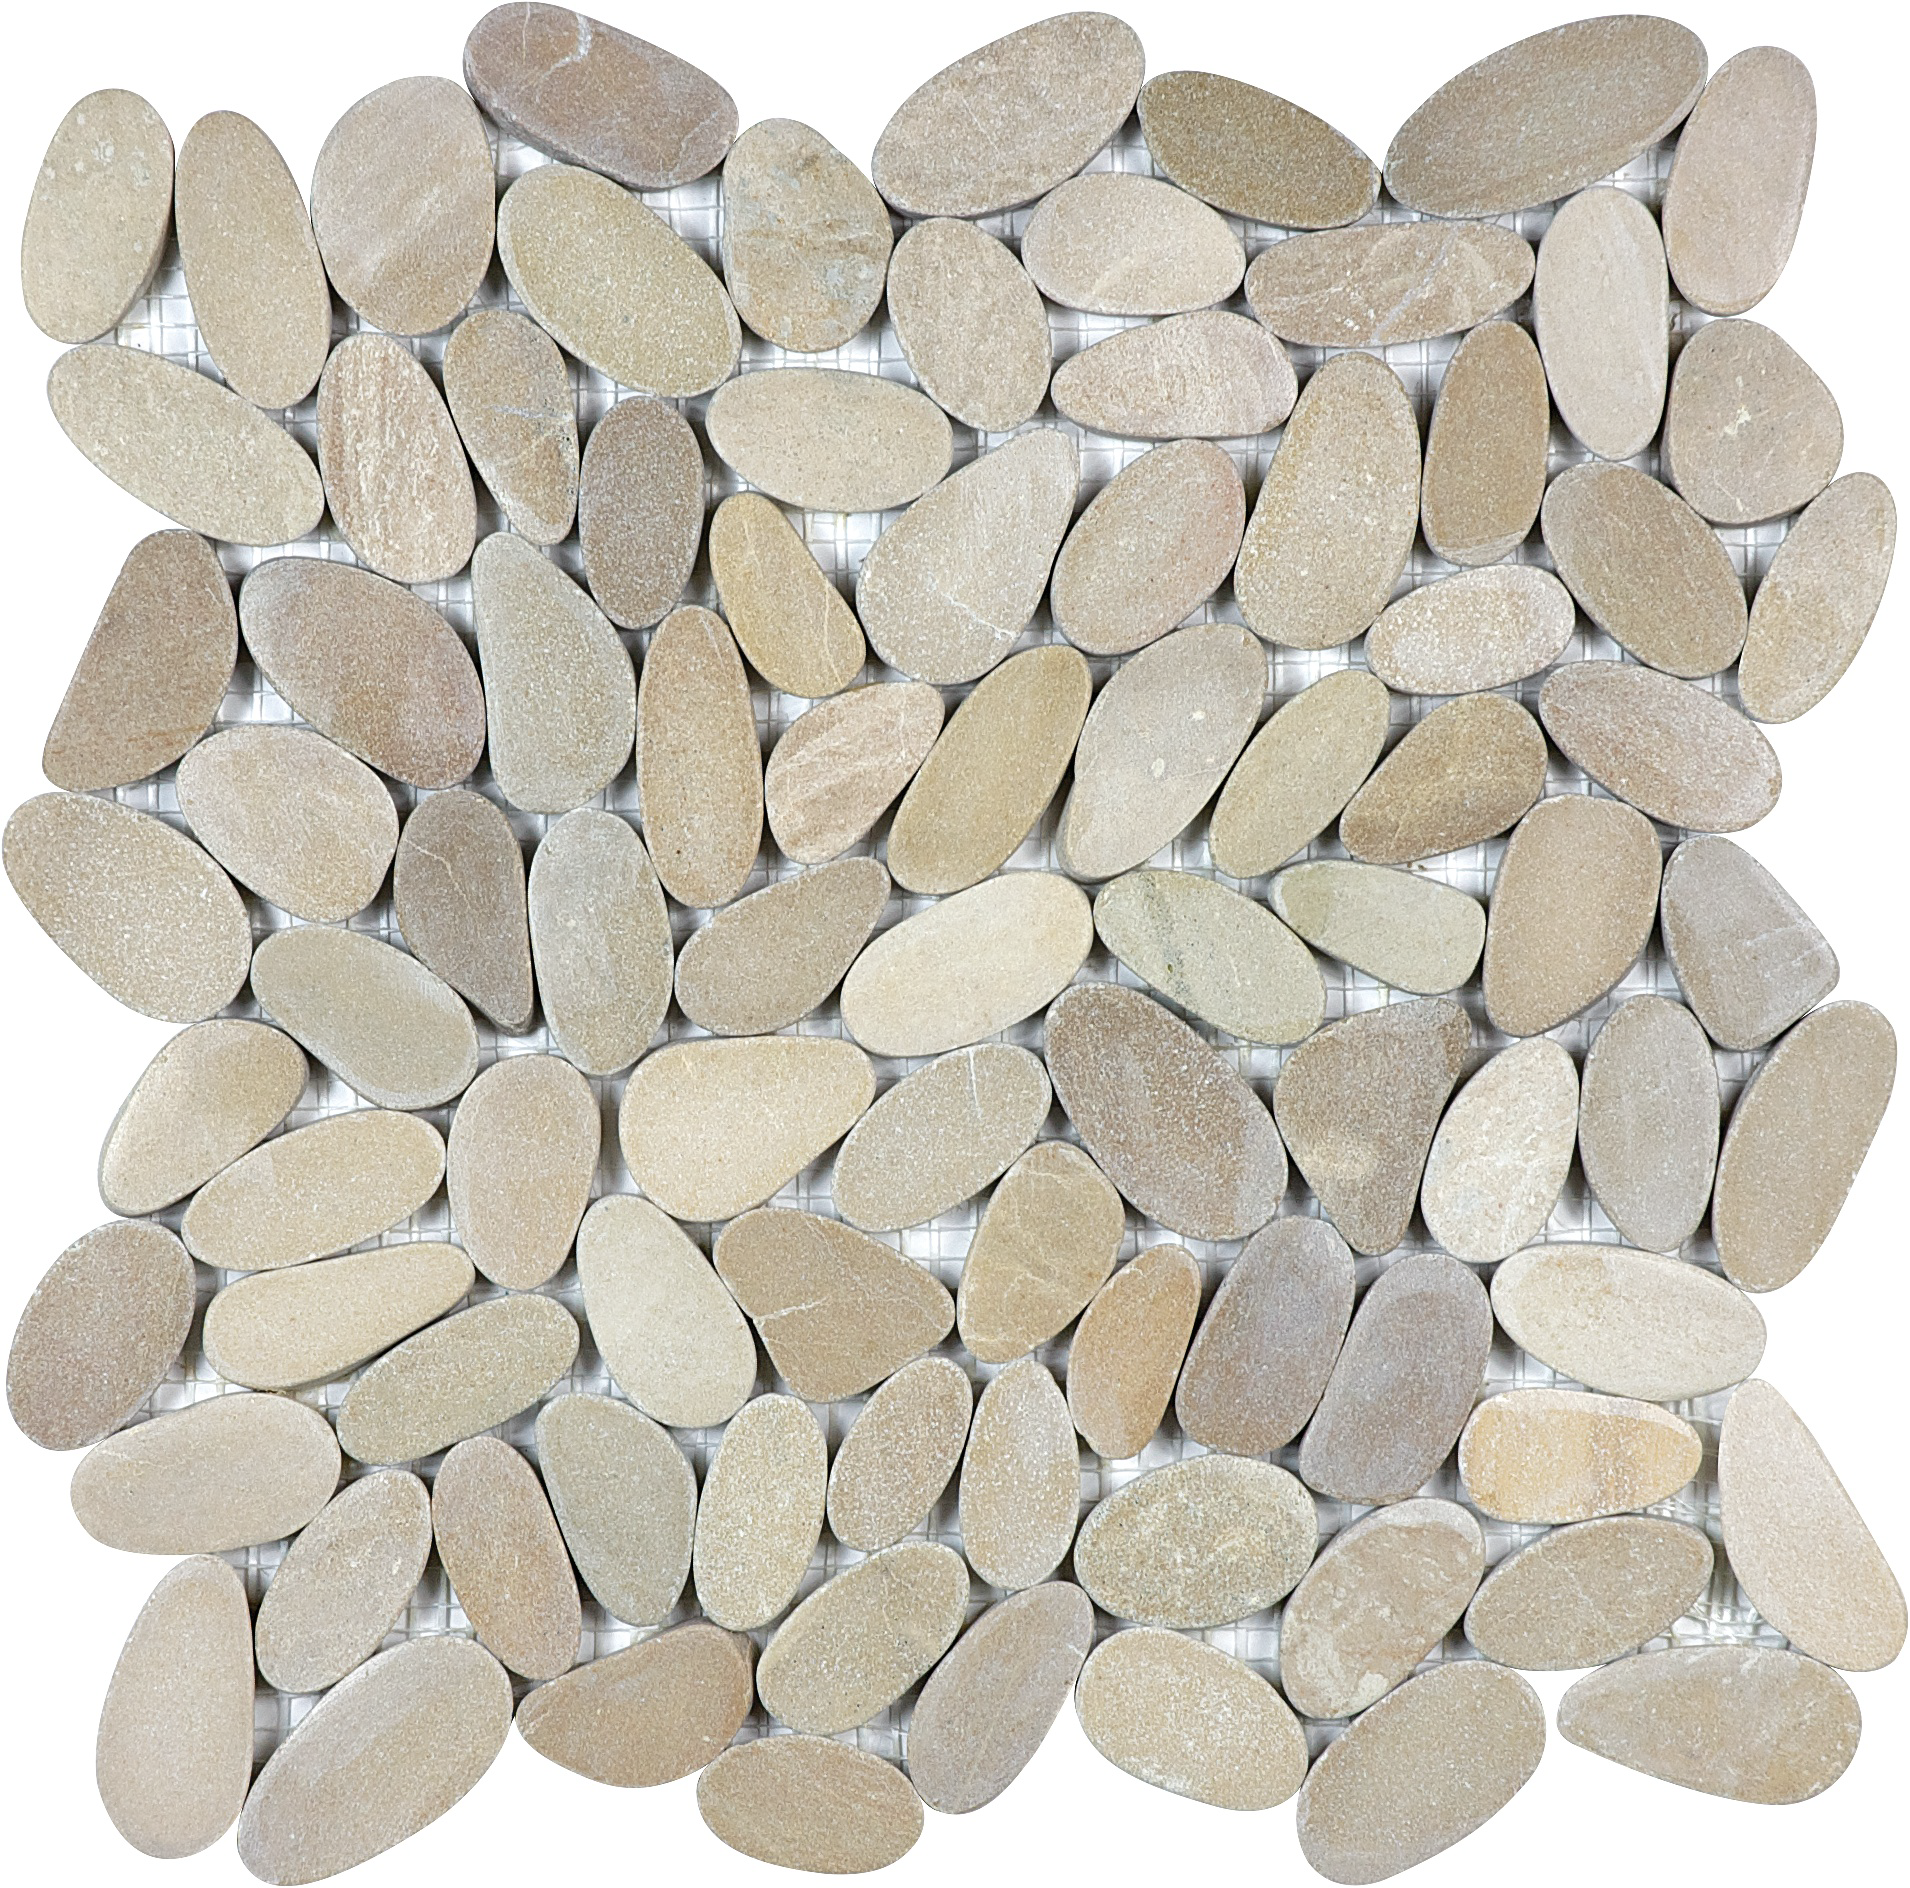 pebble driftwood tan flat pebble pattern natural stone mosaic from zen anatolia collection distributed by surface group international matte finish straight edge edge mesh shape